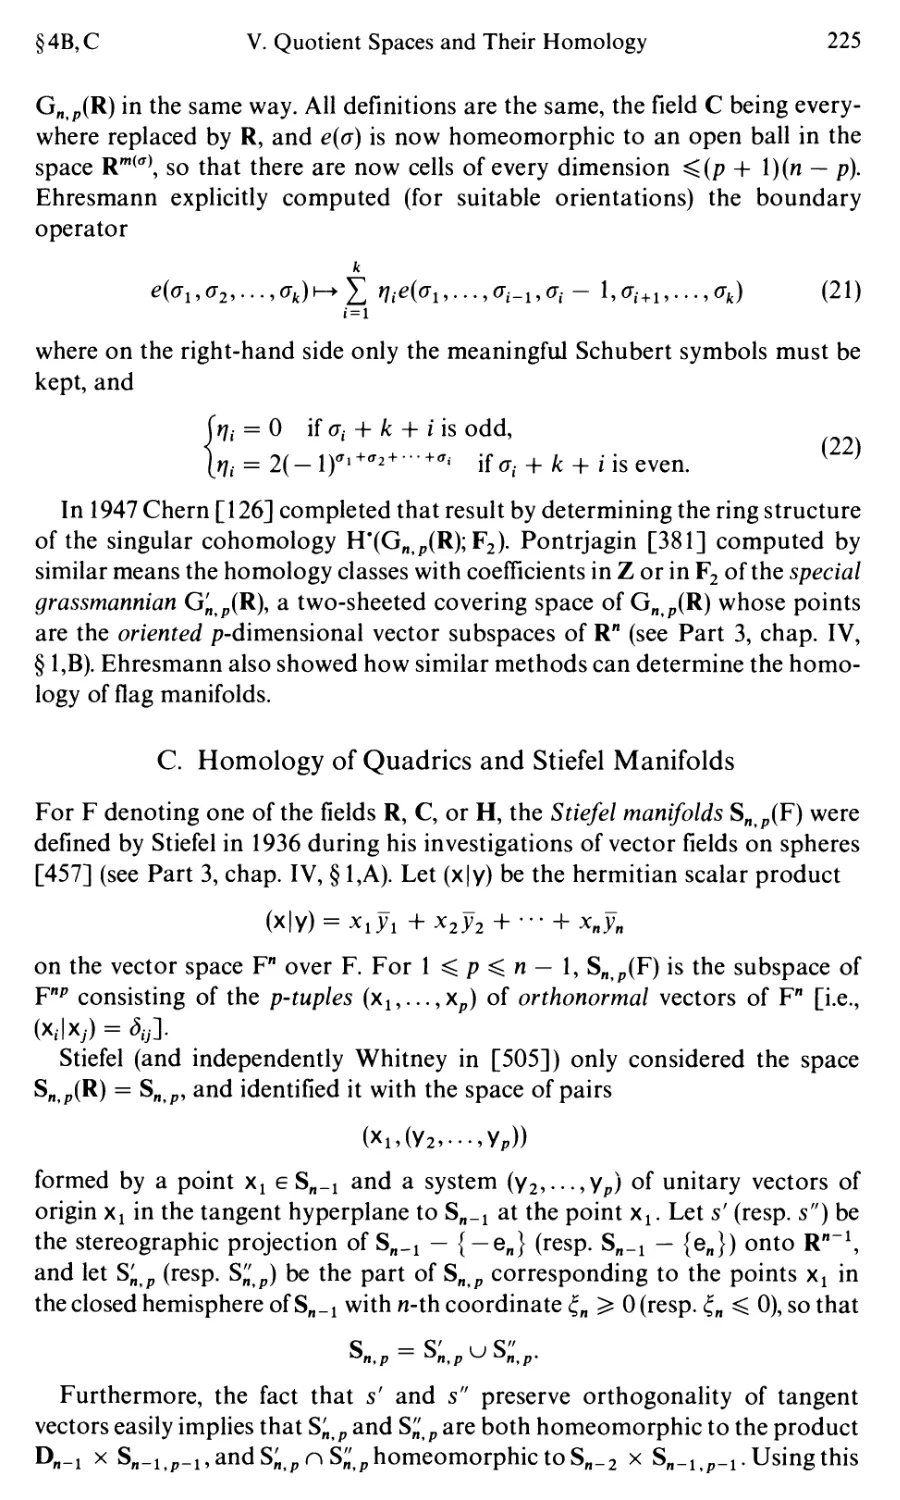 C. Homology of Quadrics and Stiefel Manifolds